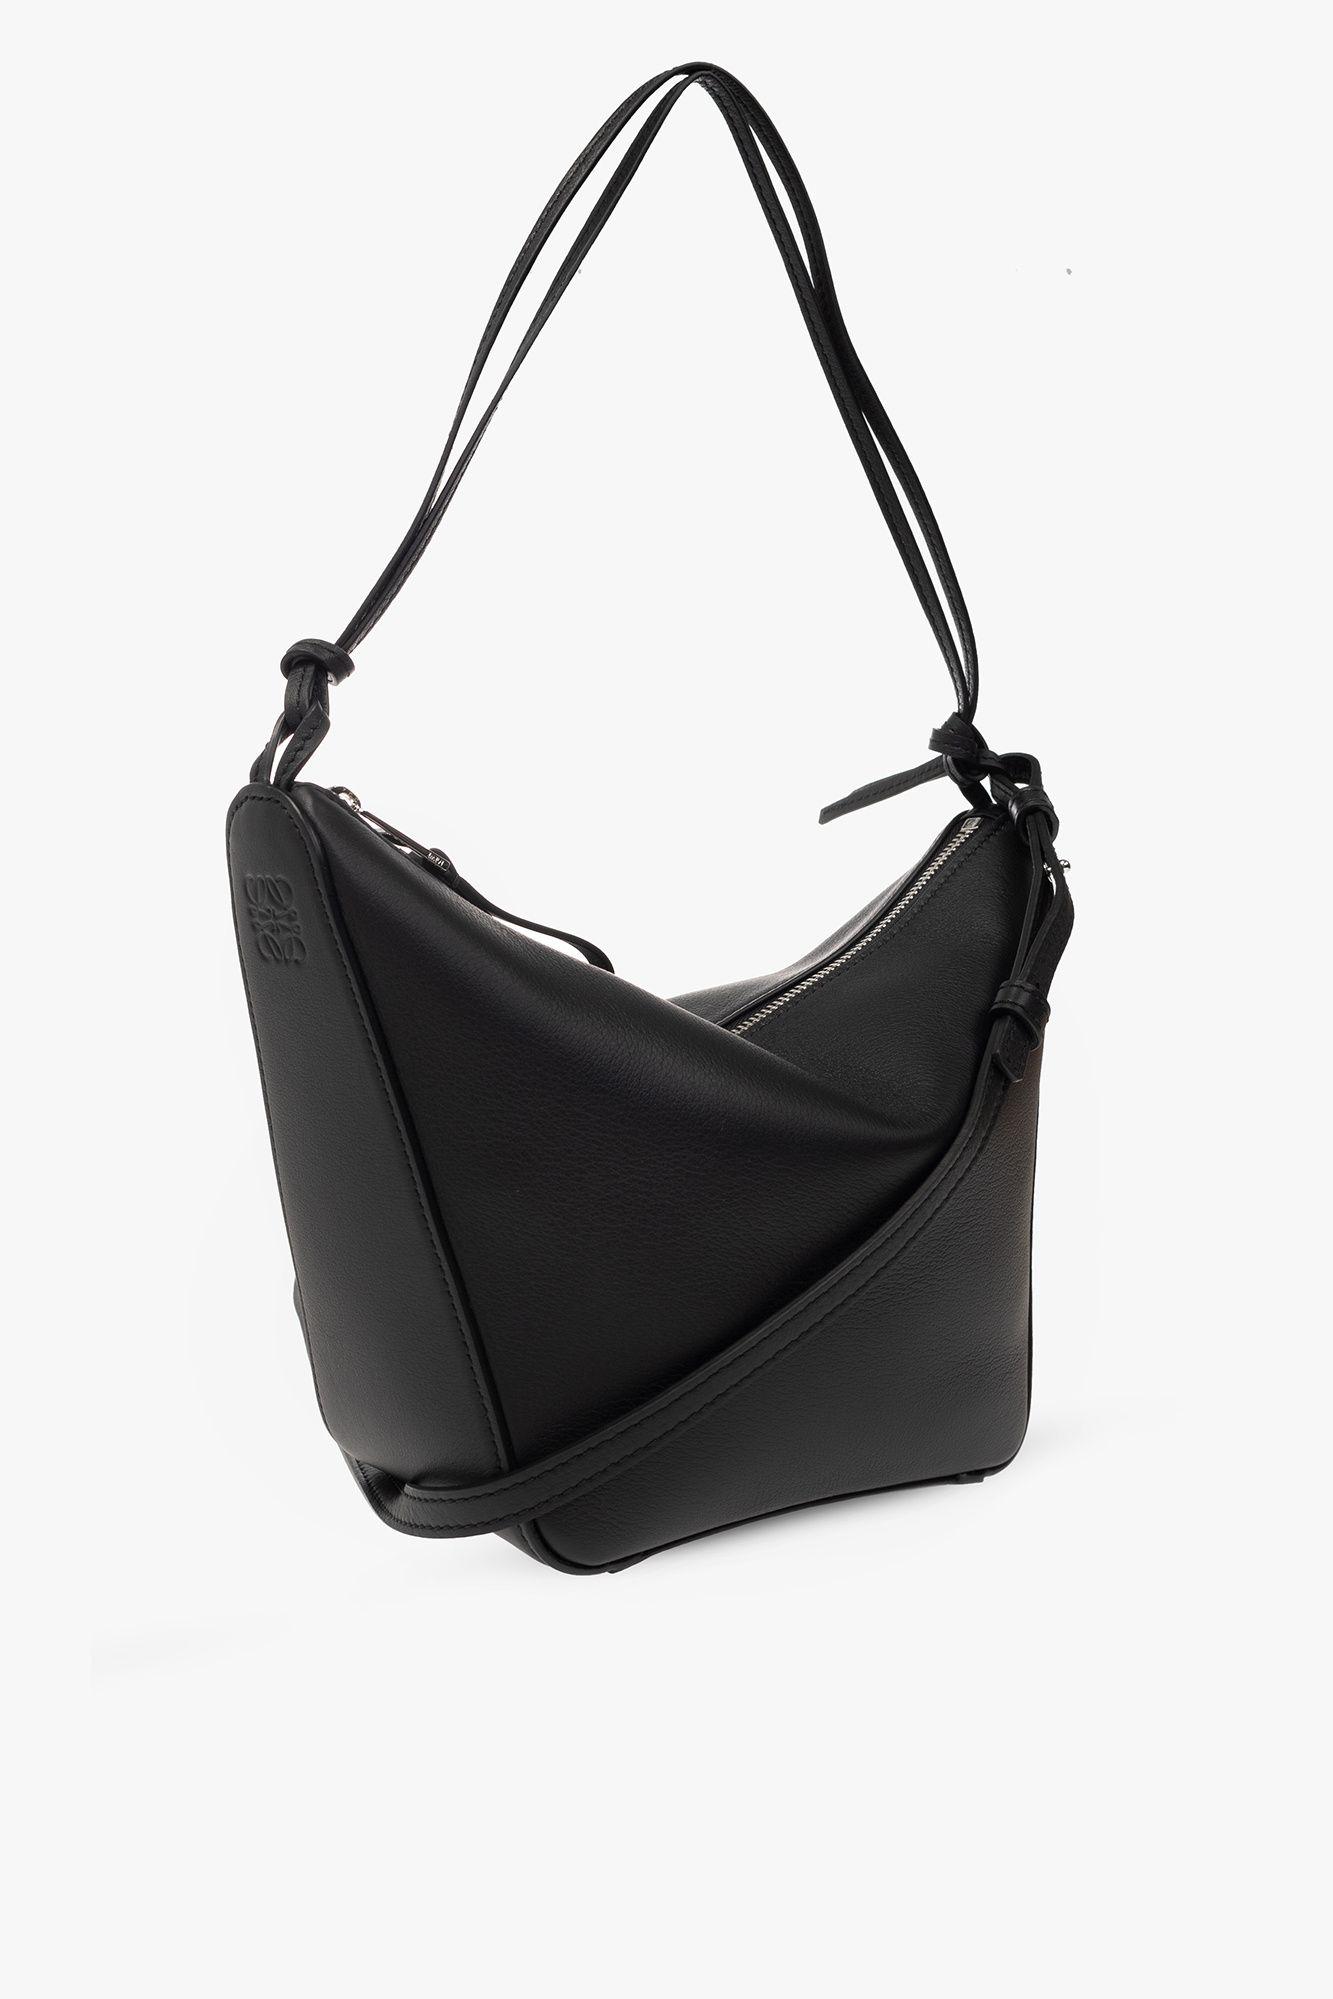 Loewe Women's 'Hammock Mini' Hobo Bag - Black - Hobo Bags